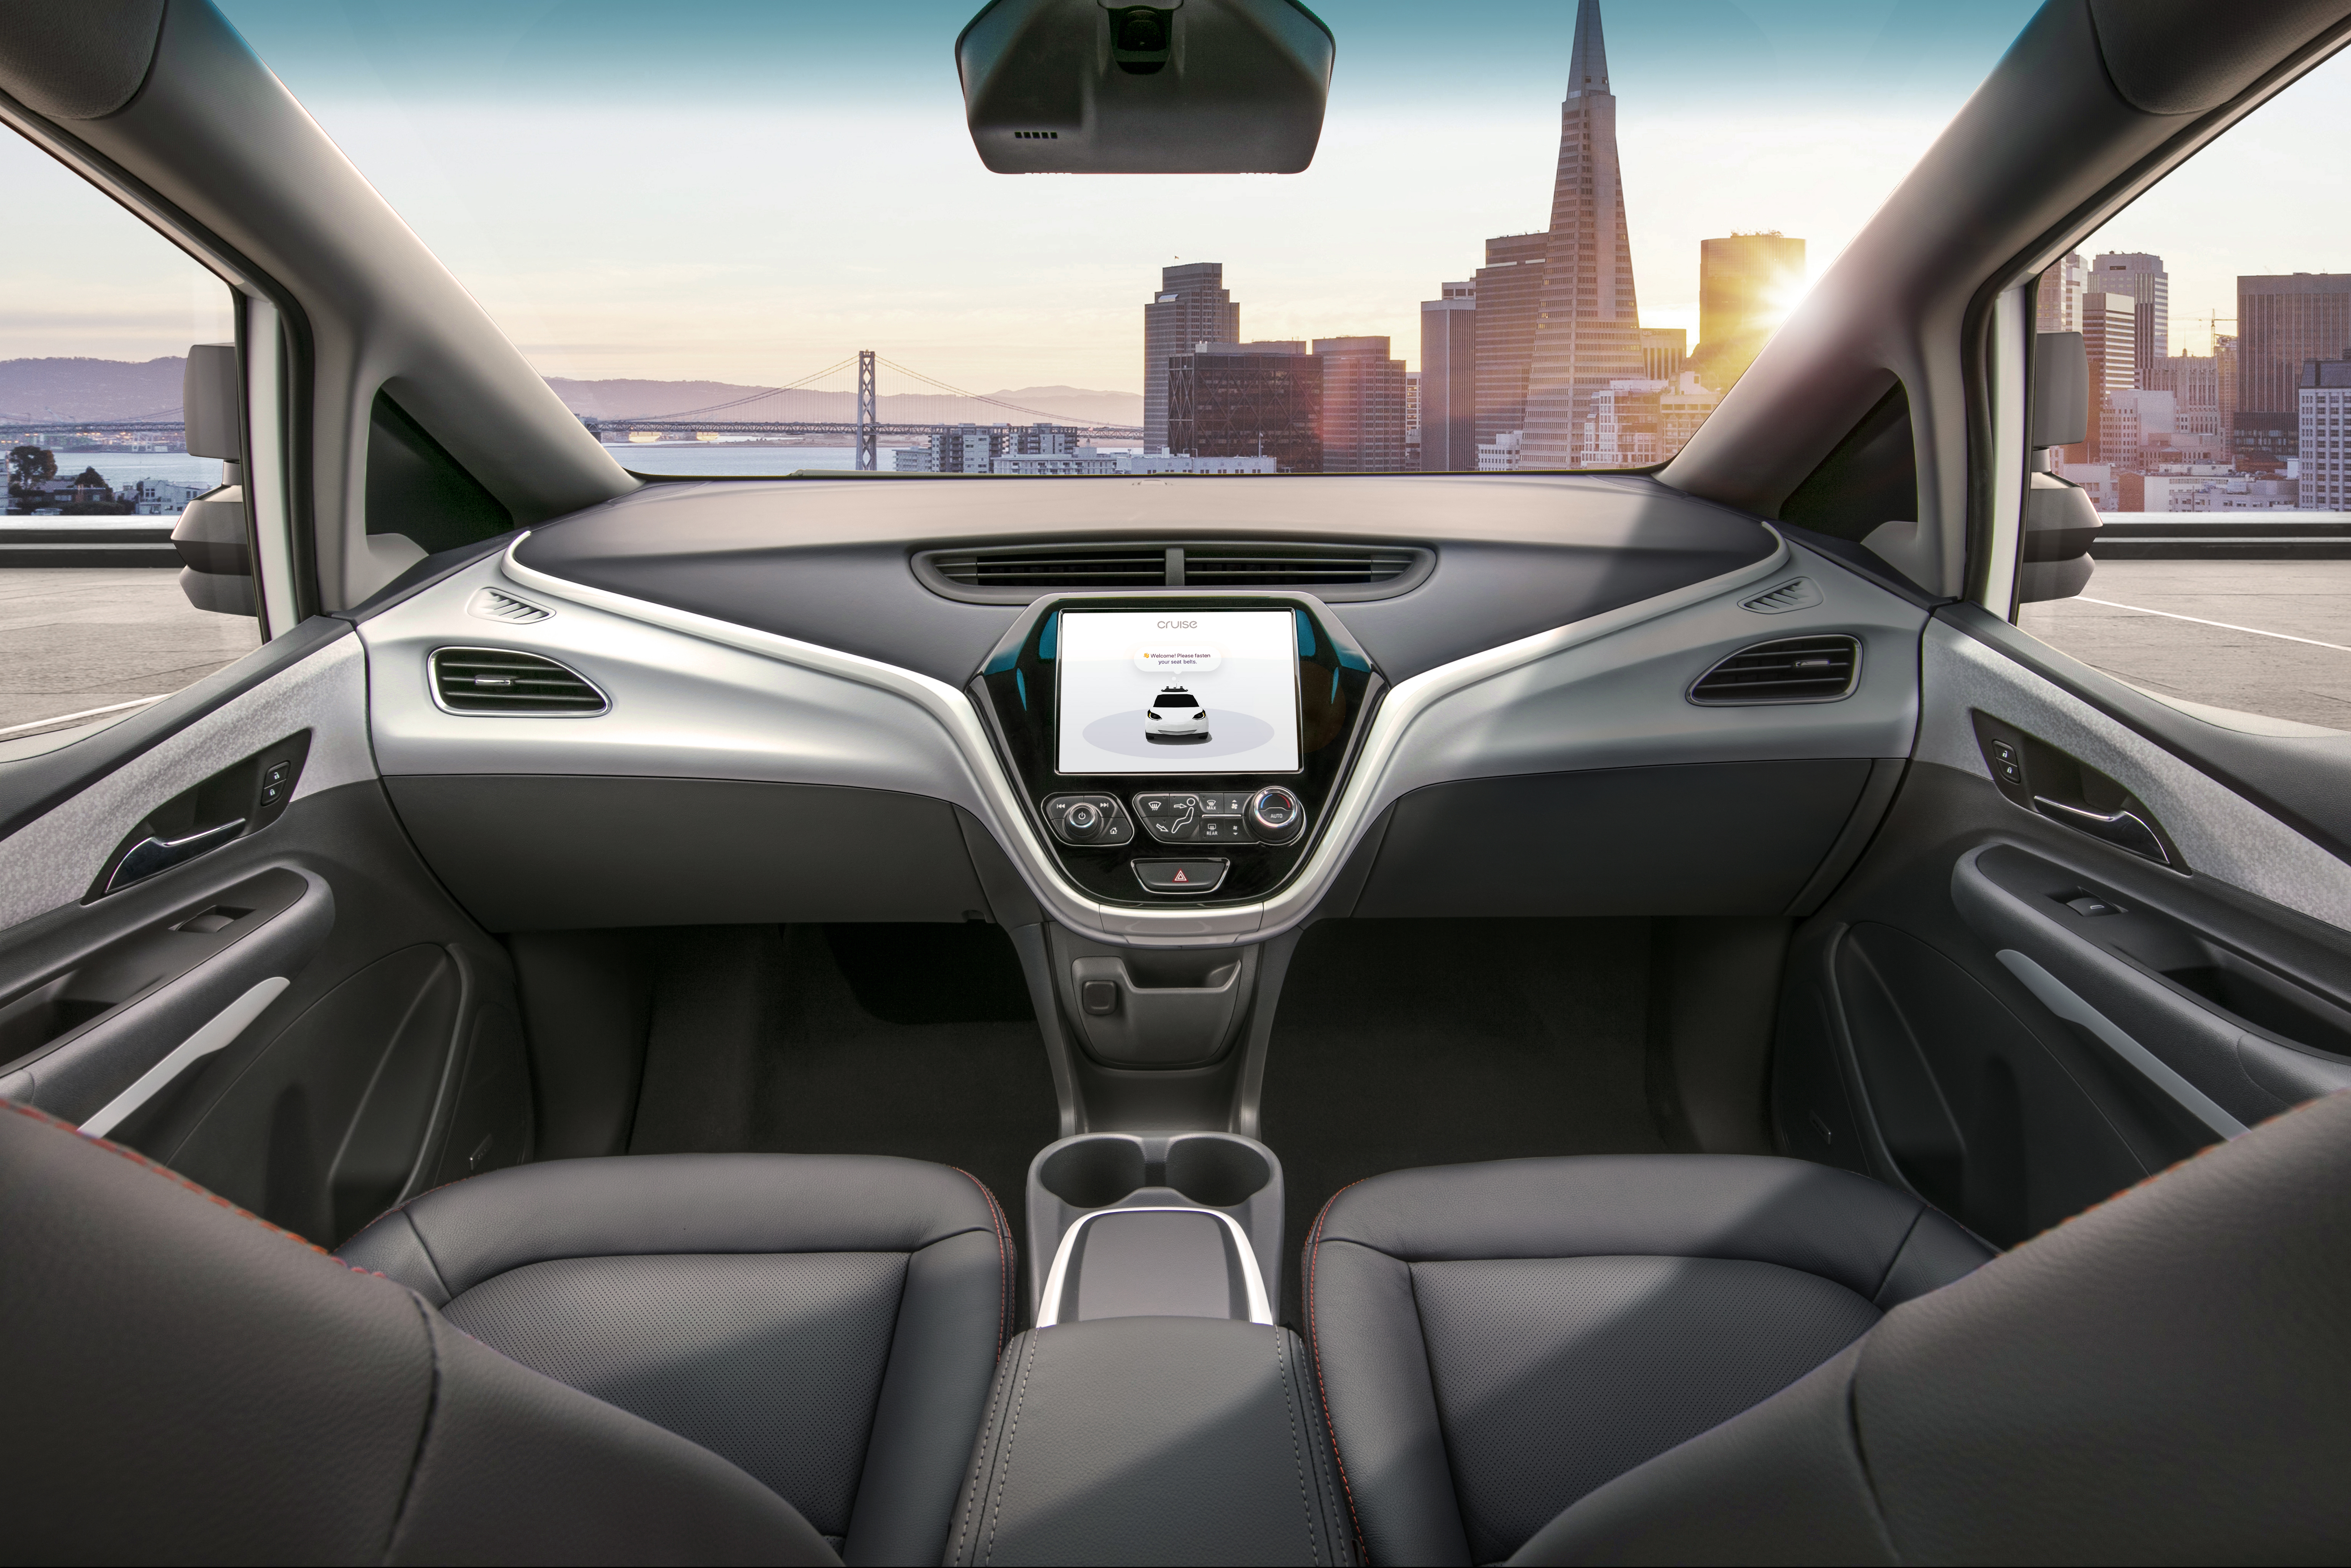 General Motors’ next generation of self-driving cars